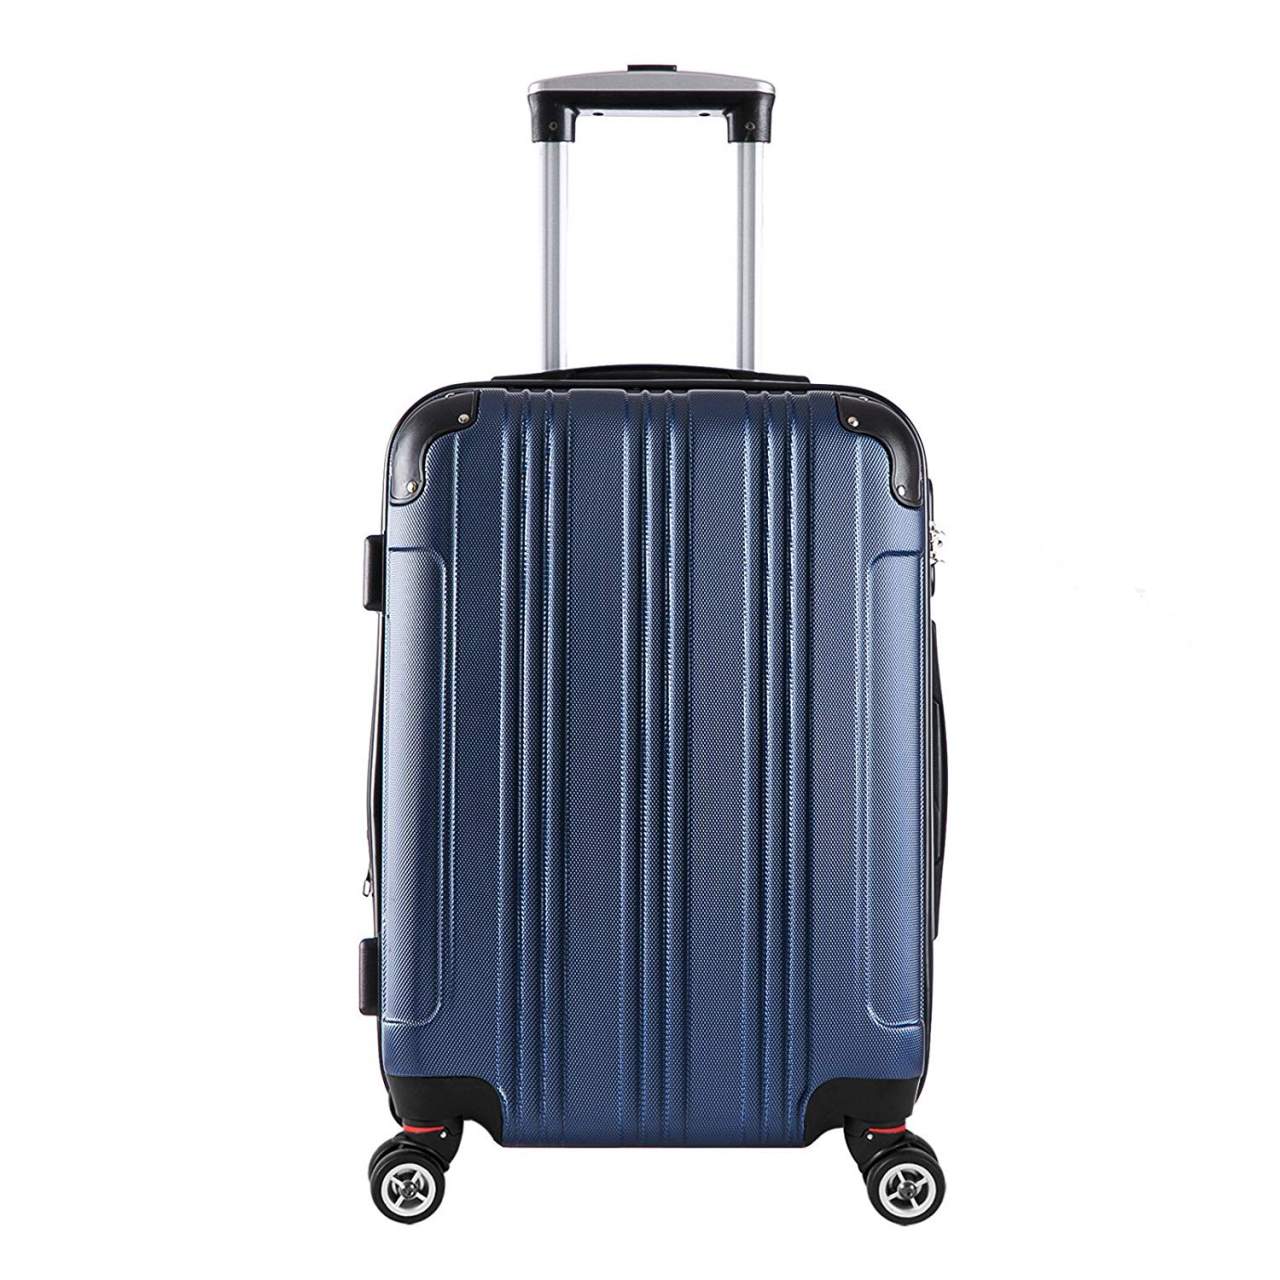 4 wheel hard suitcase lightweight